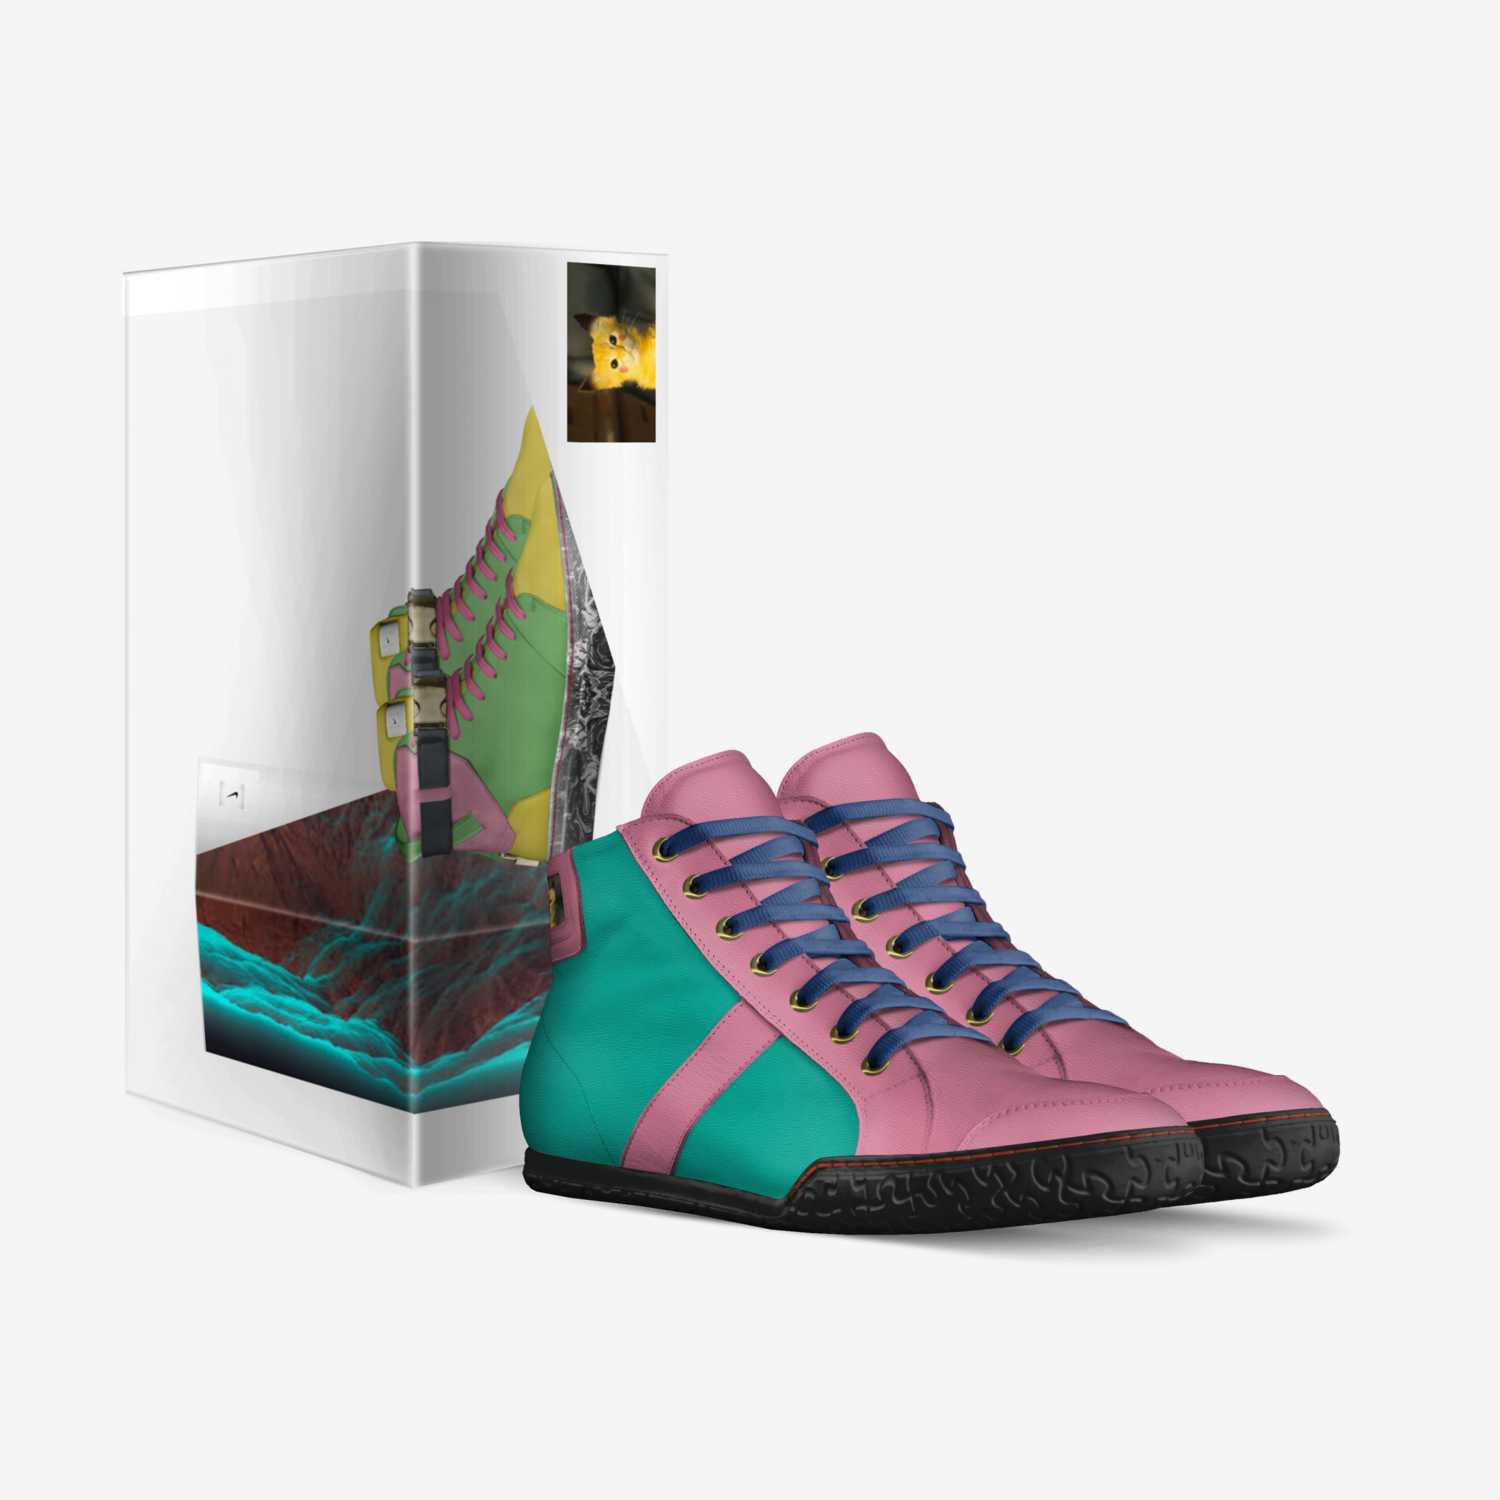 ninja shoes custom made in Italy shoes by Elijah Mravlag | Box view